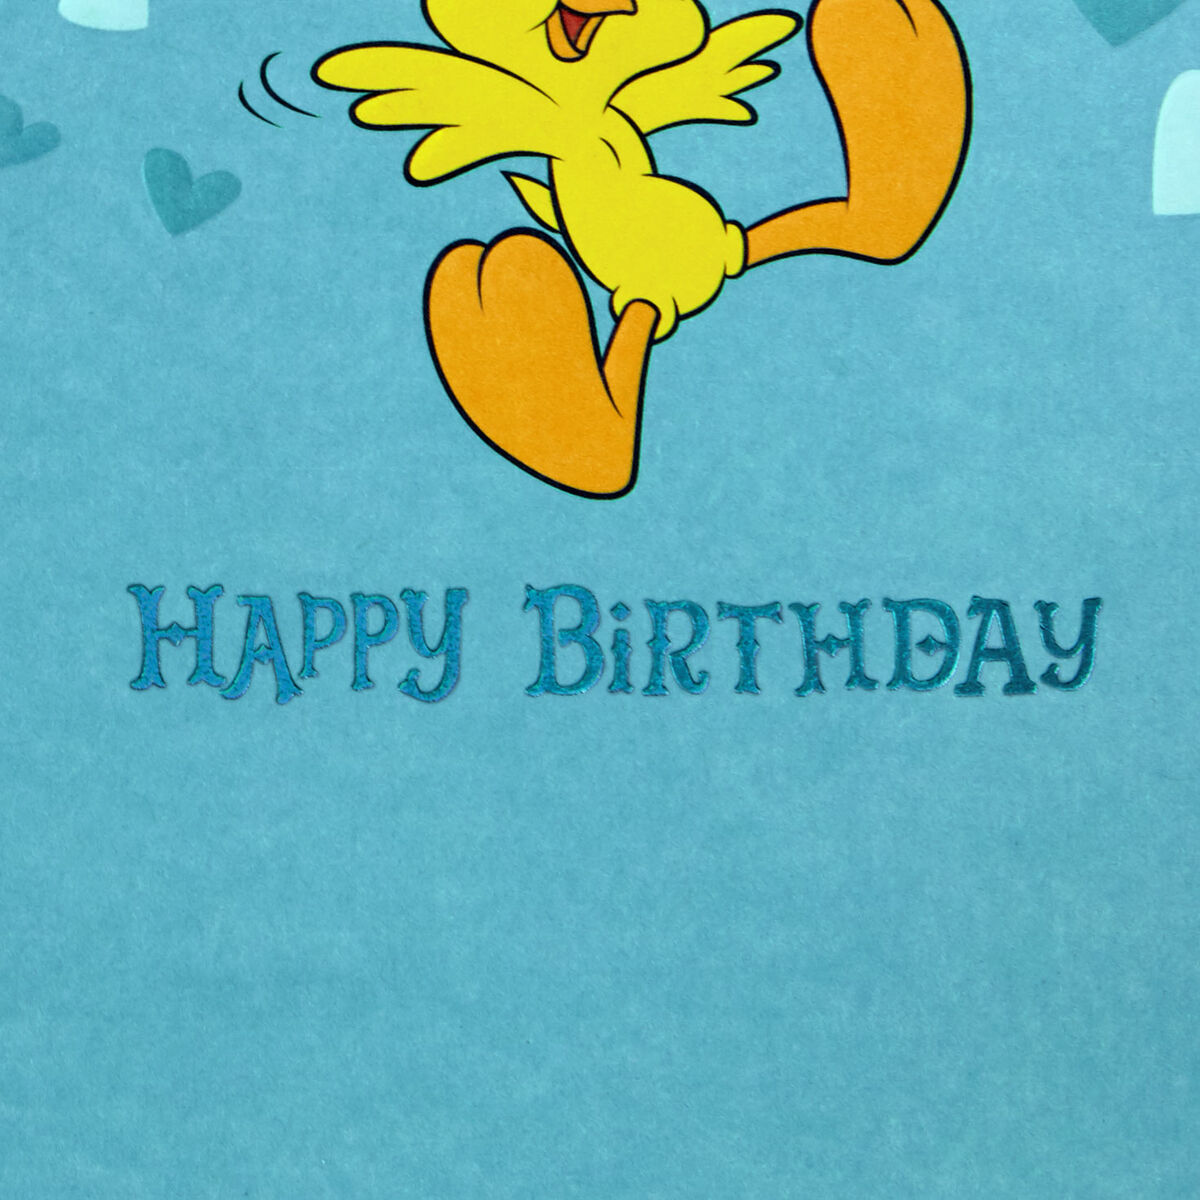 Looney Tunes™ Tweety Bird Lots of Love Birthday Card - Greeting Cards